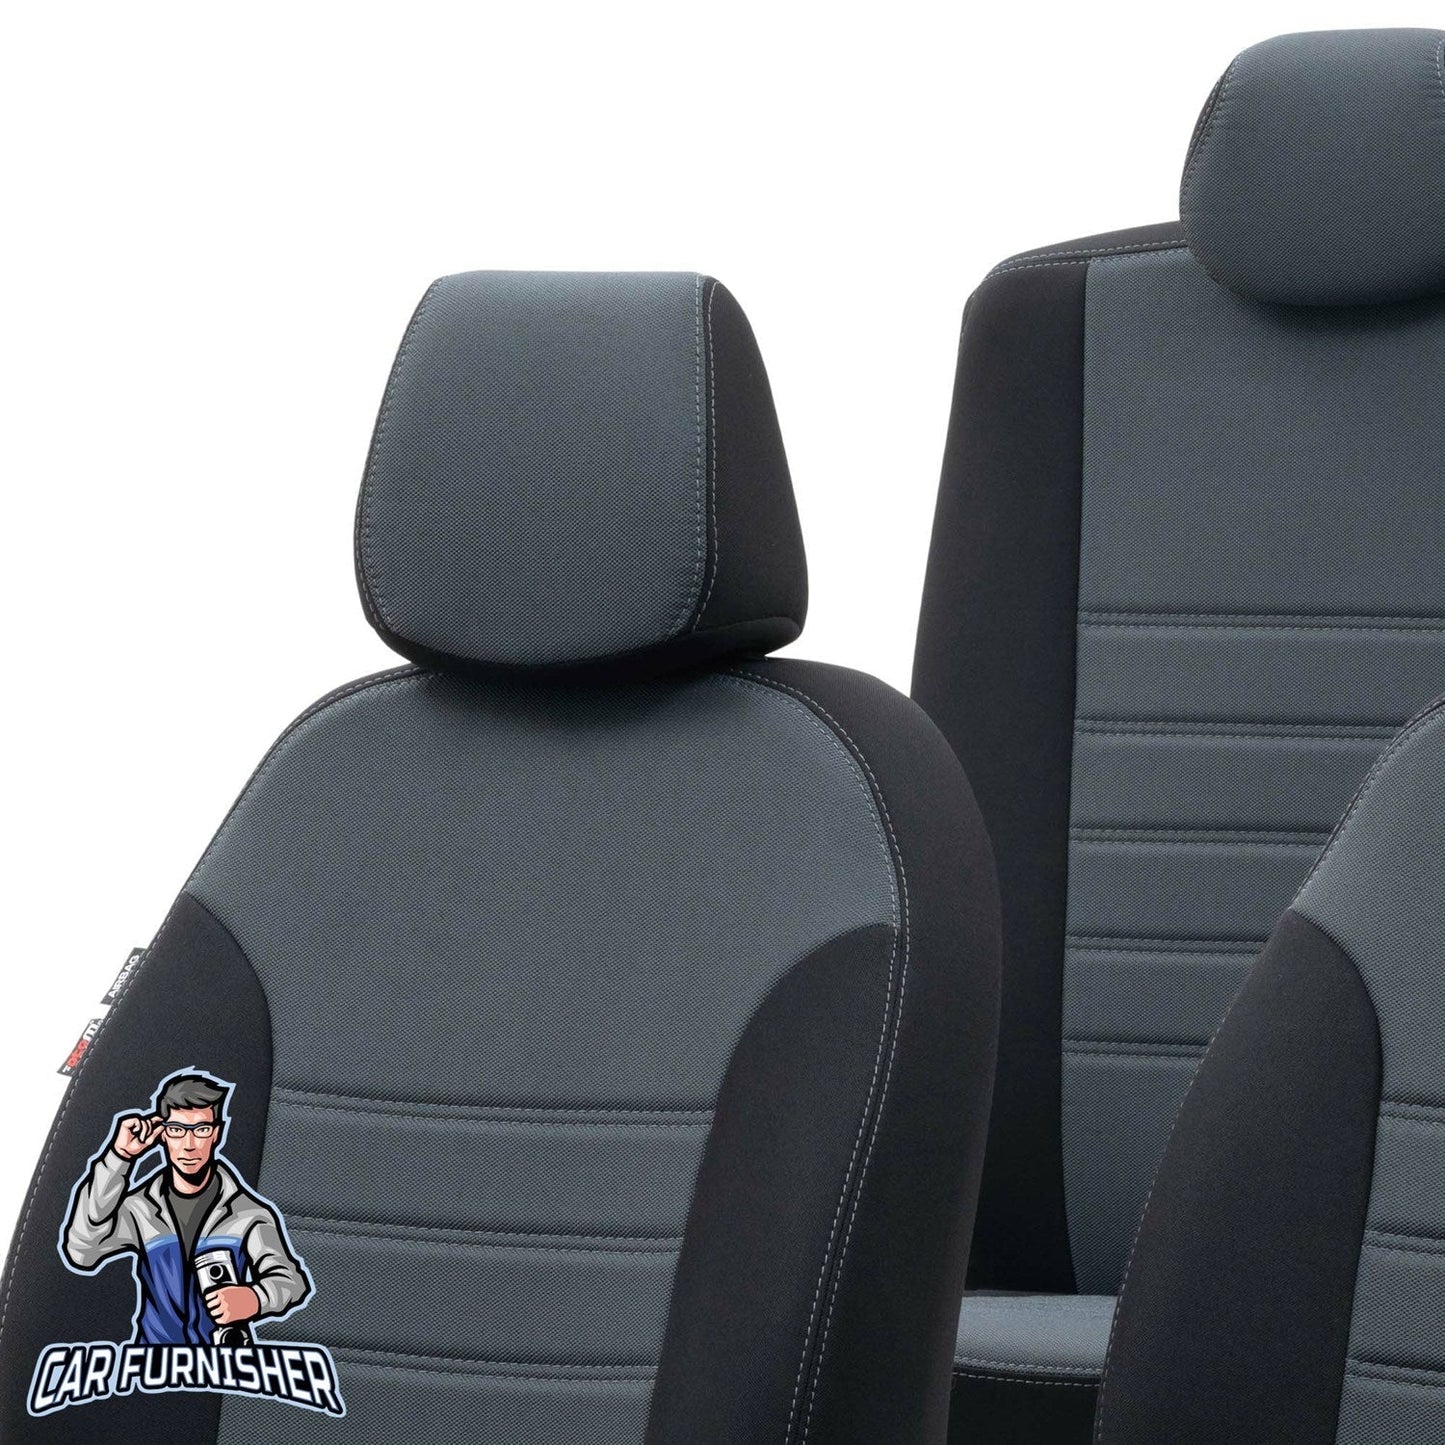 Ford Transit Seat Covers Original Jacquard Design Smoked Black Jacquard Fabric